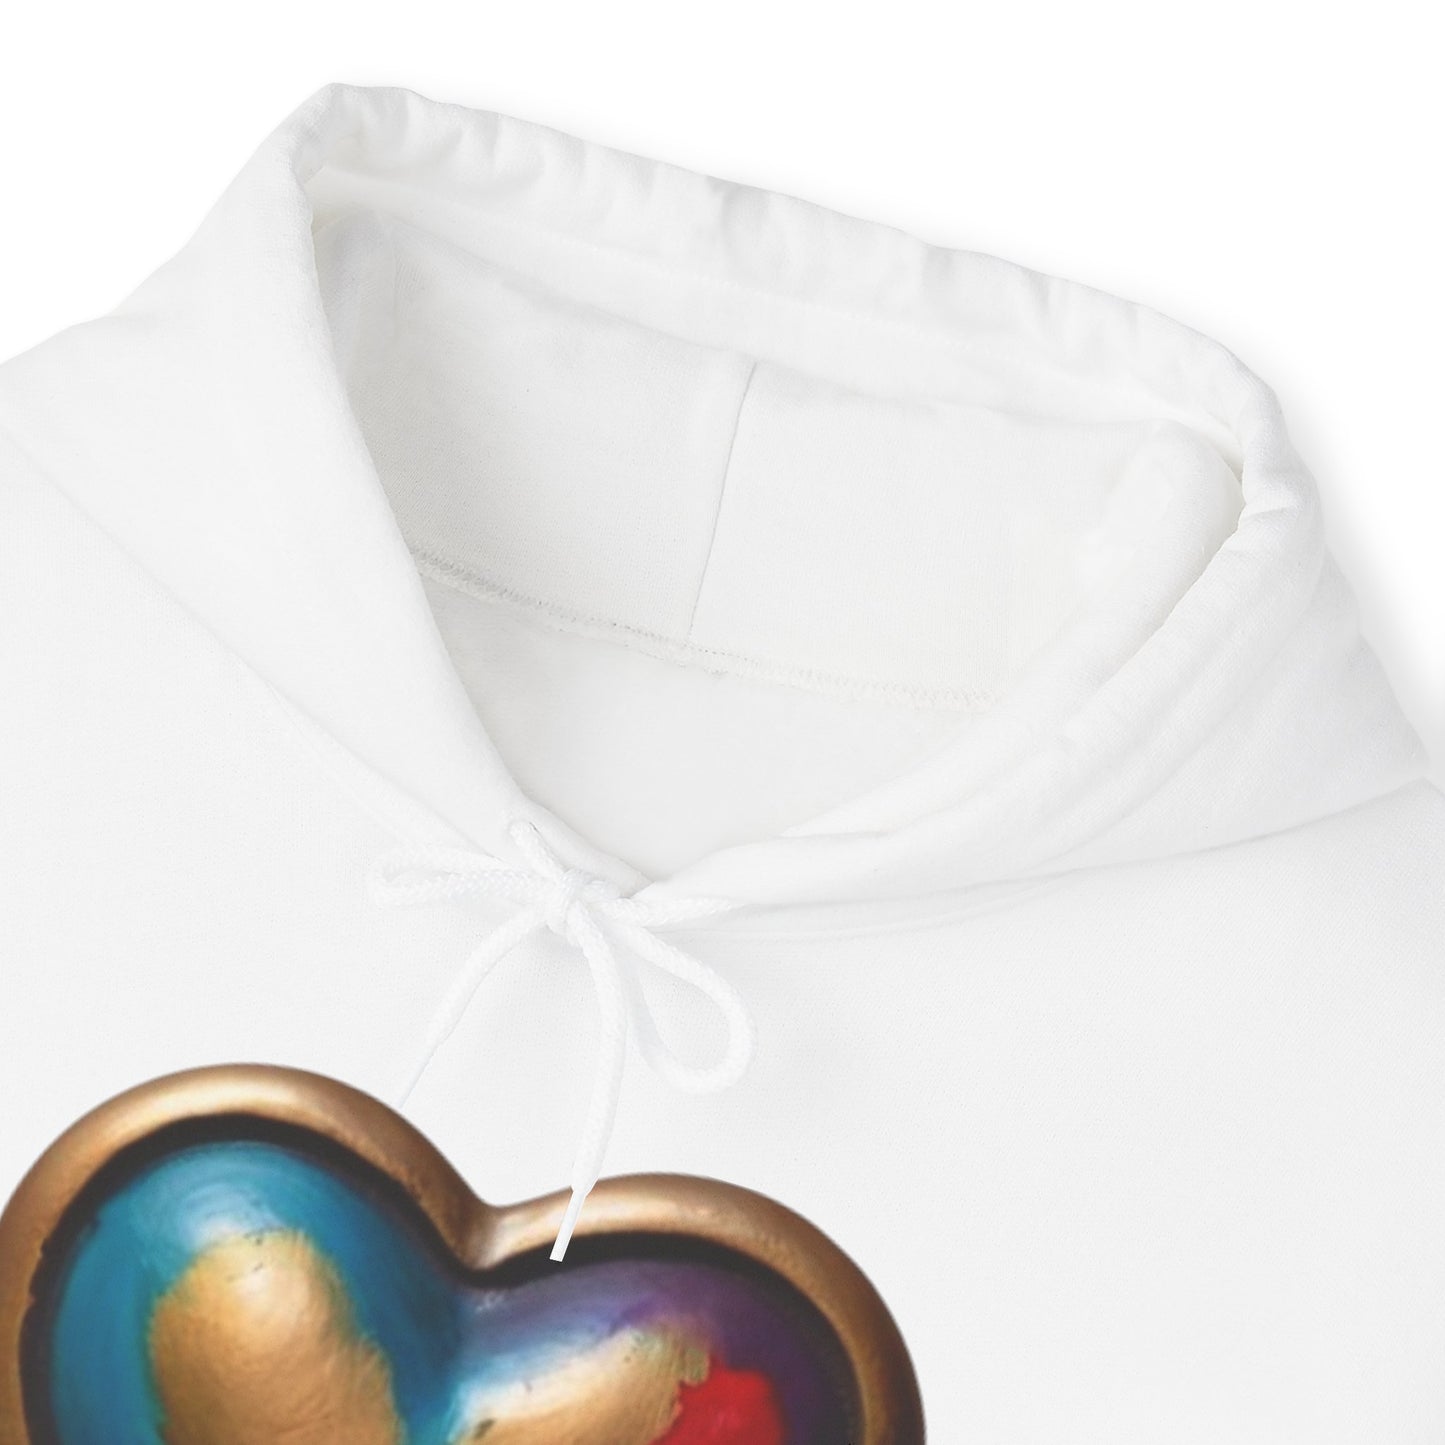 Bronze Colourful Love Heart - Unisex Hooded Sweatshirt